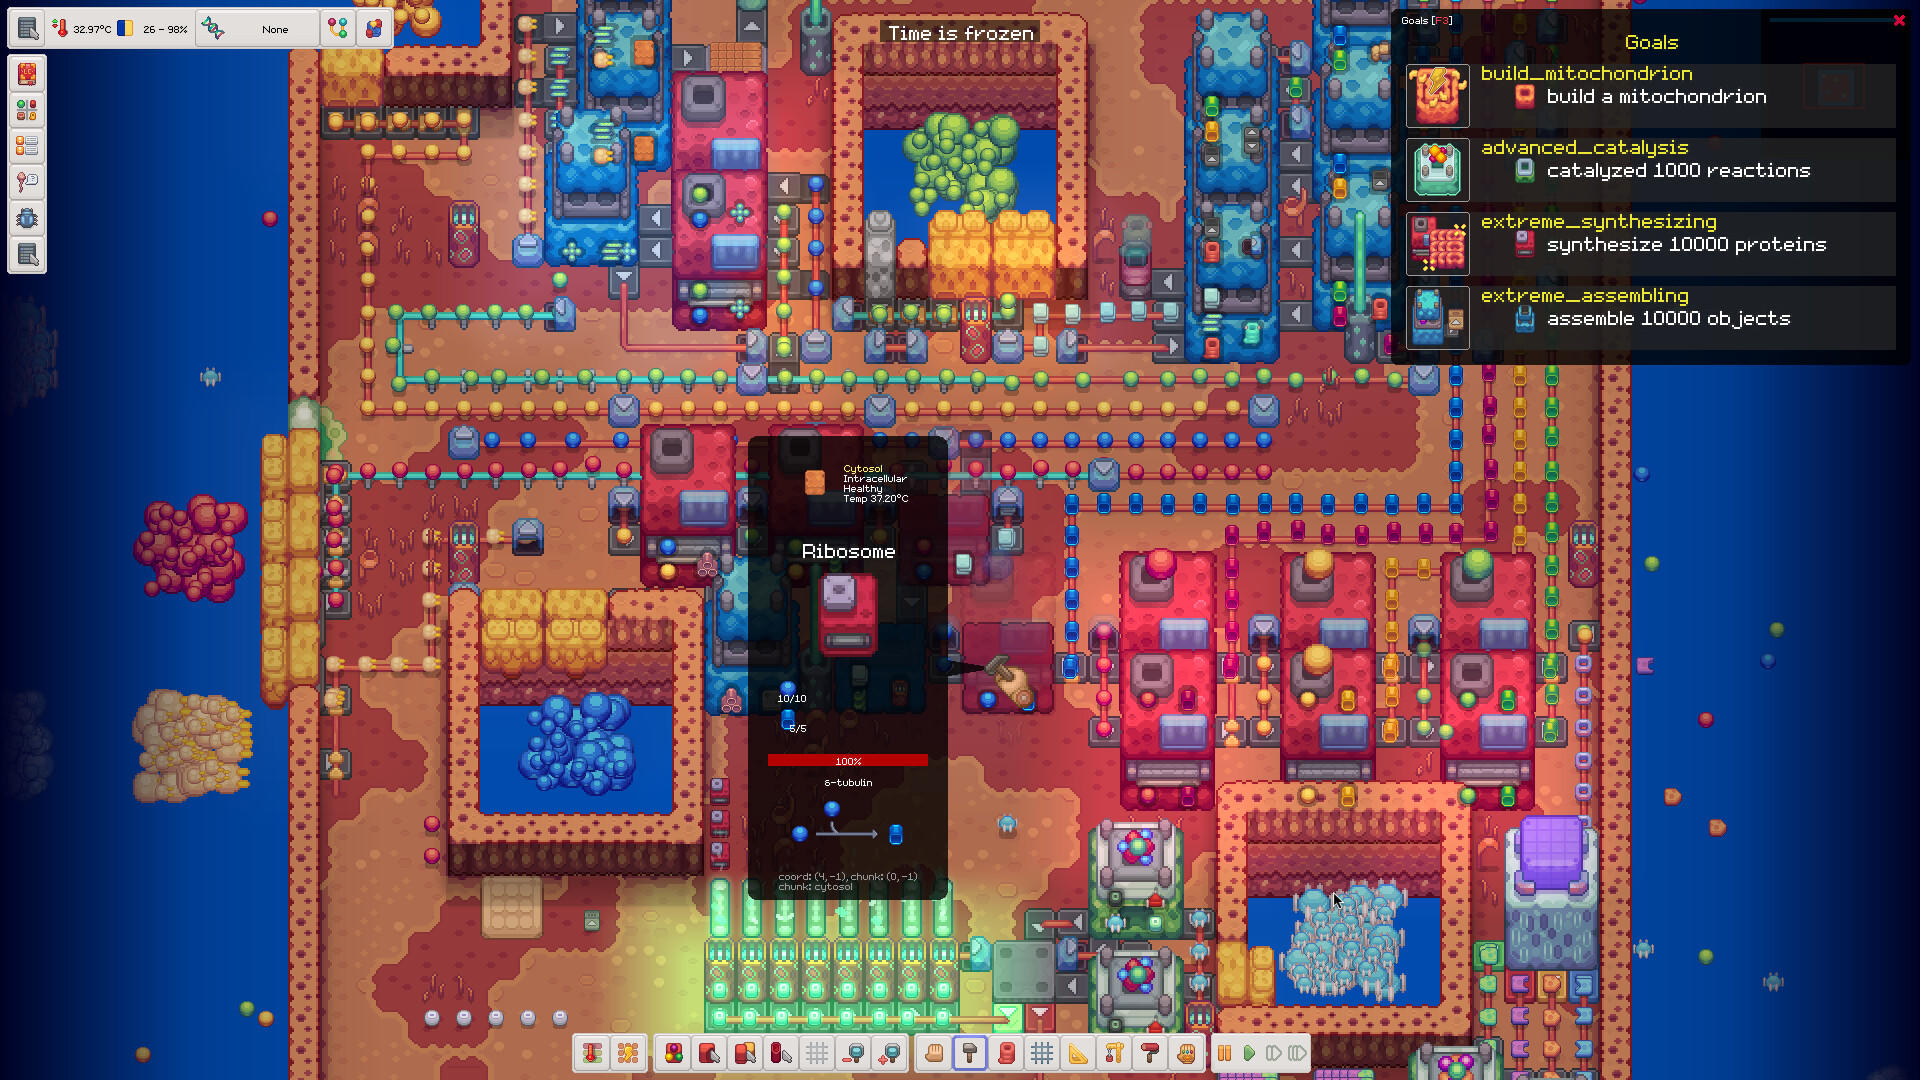 Lifecraft screenshot game